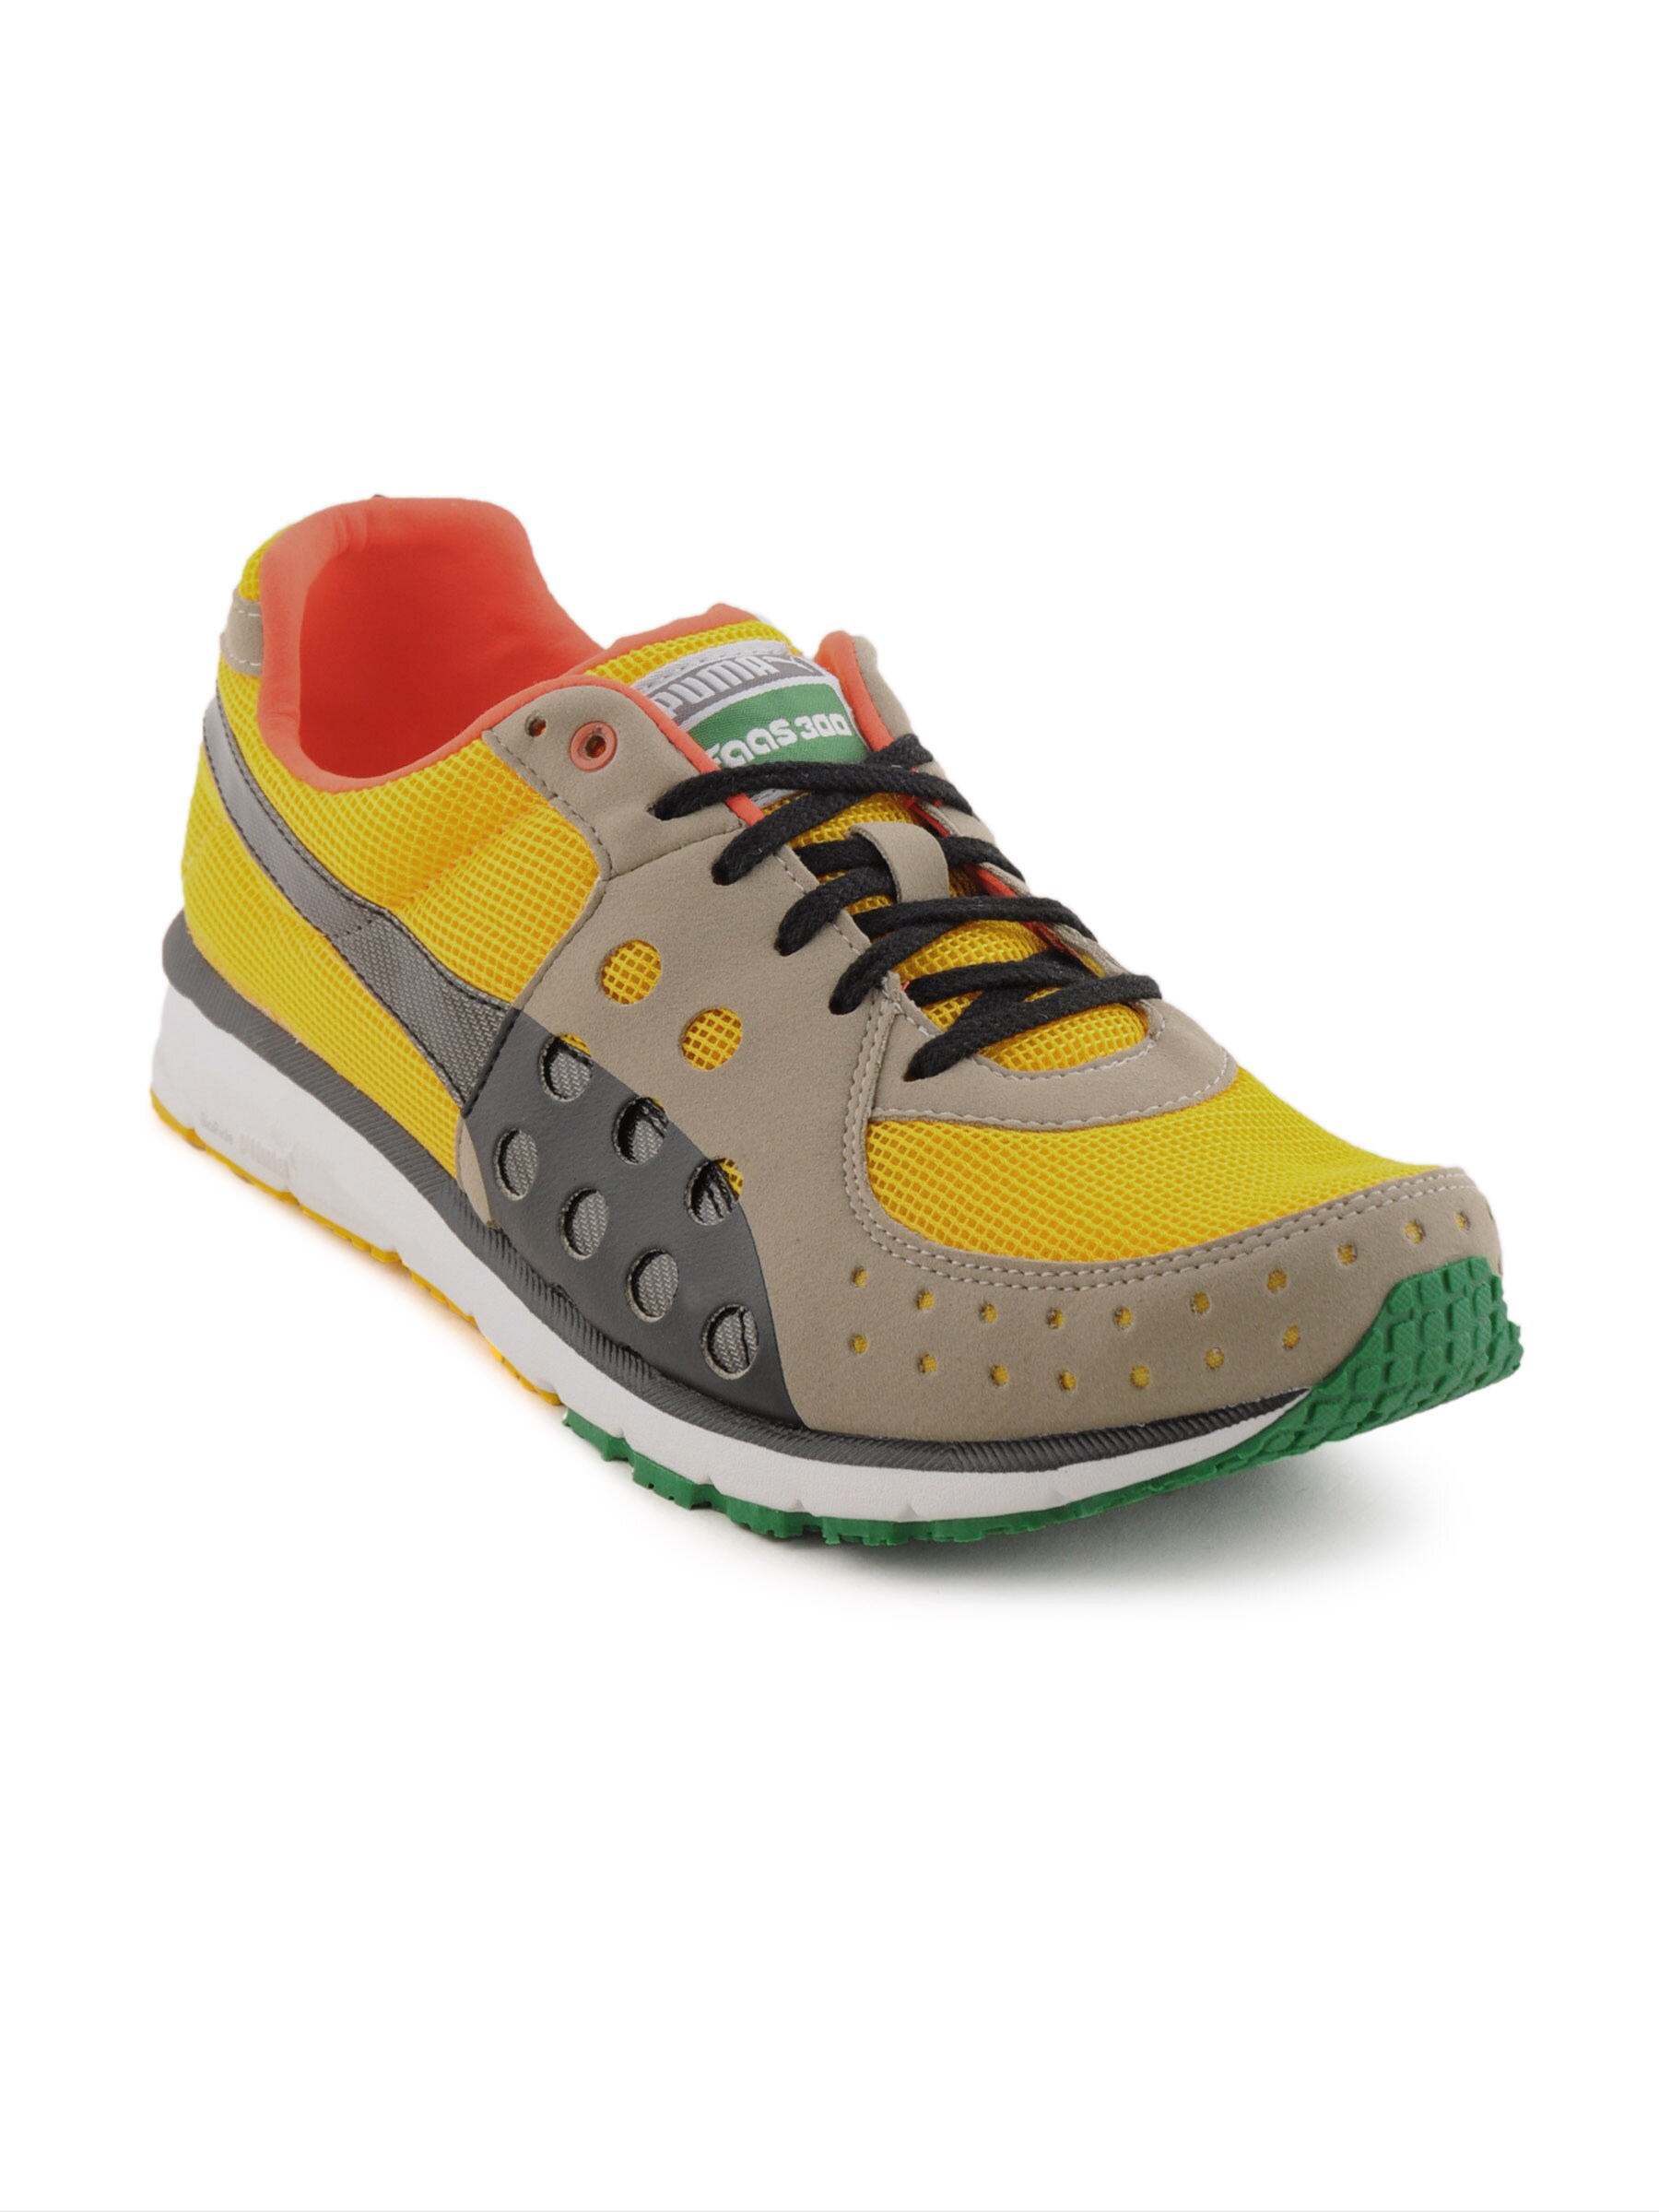 Puma Men Faas 300 Yellow Sports Shoes